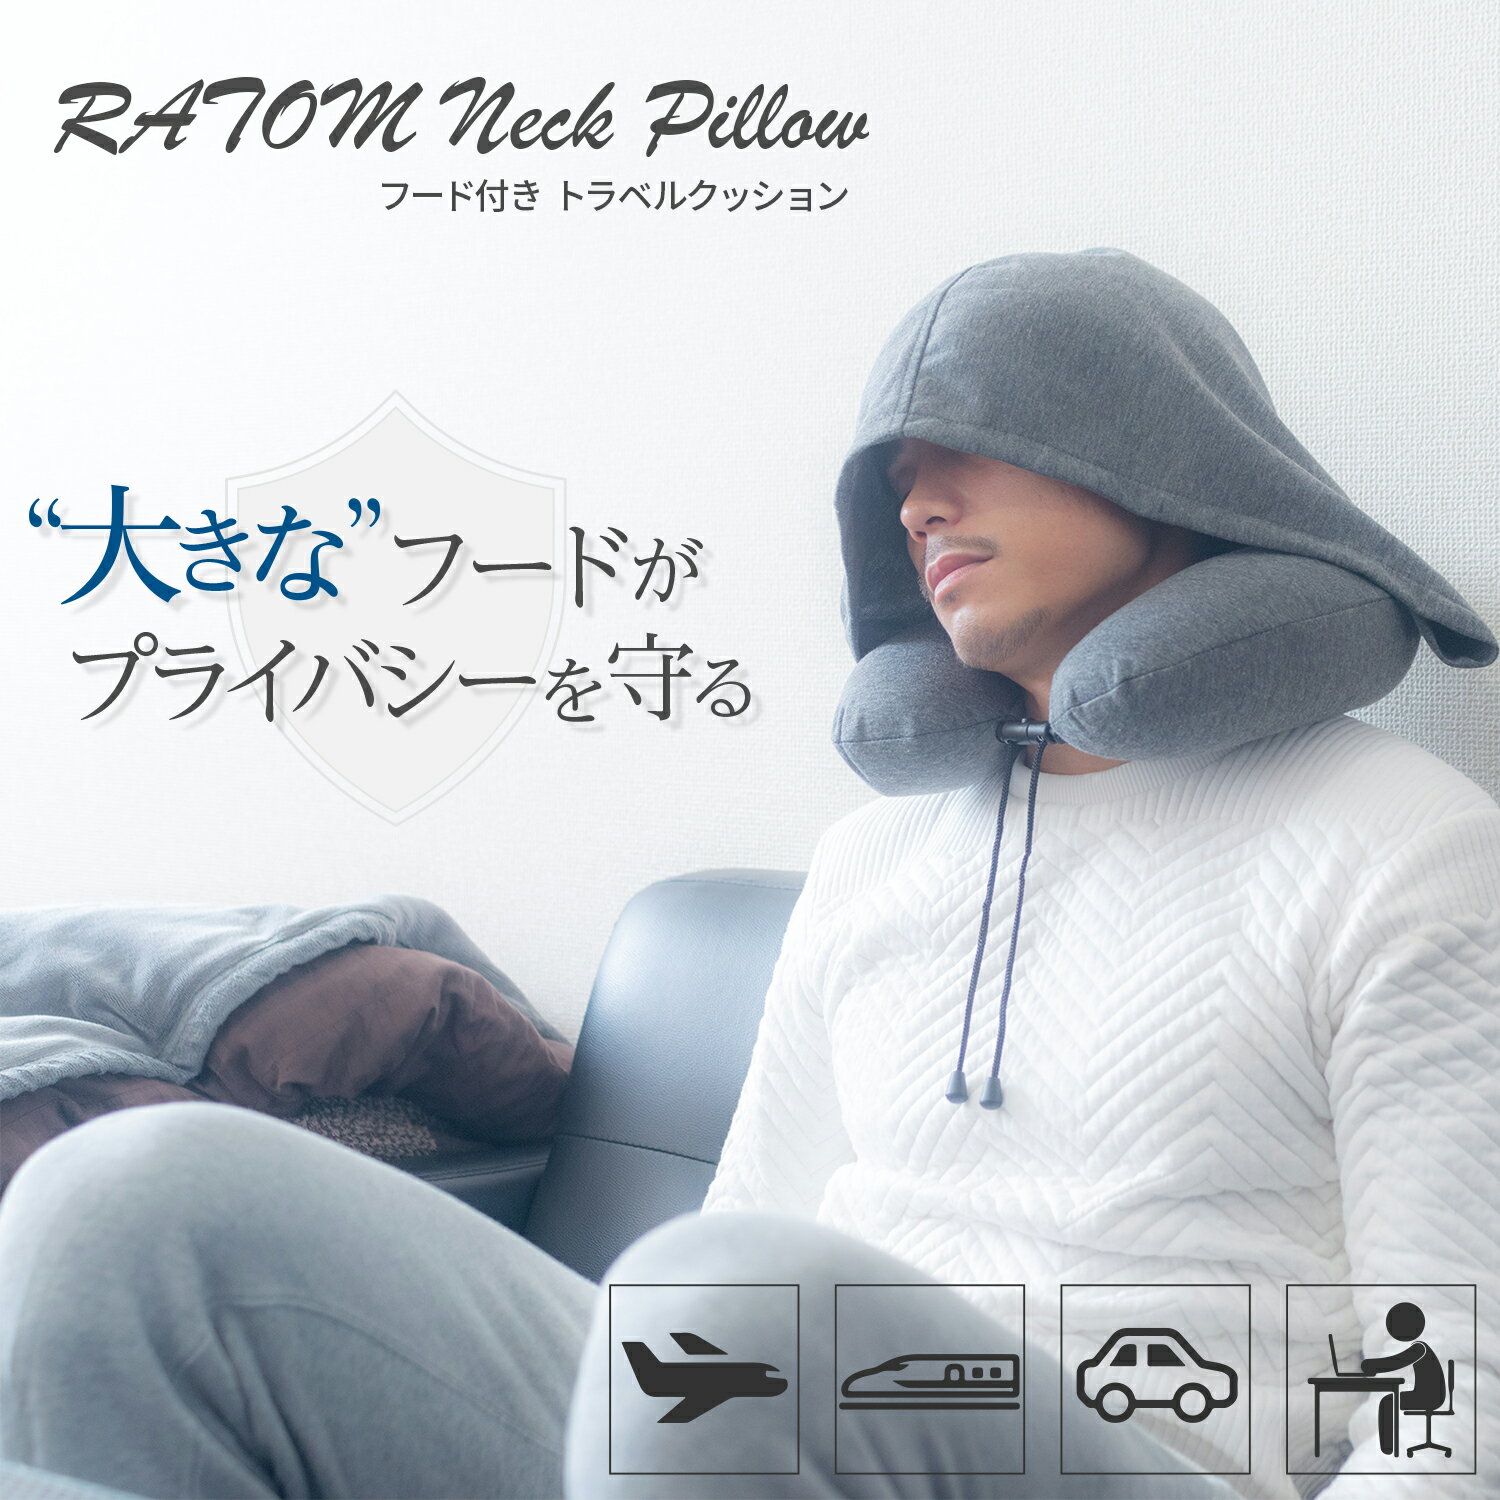 RATOM] ネックピロー 低反発 昼寝枕 携帯枕 旅行 大きなフードで寝顔気にせず睡眠 h1t1FwpxdT, 暑さ対策、冷却グッズ -  www.seruun.mn